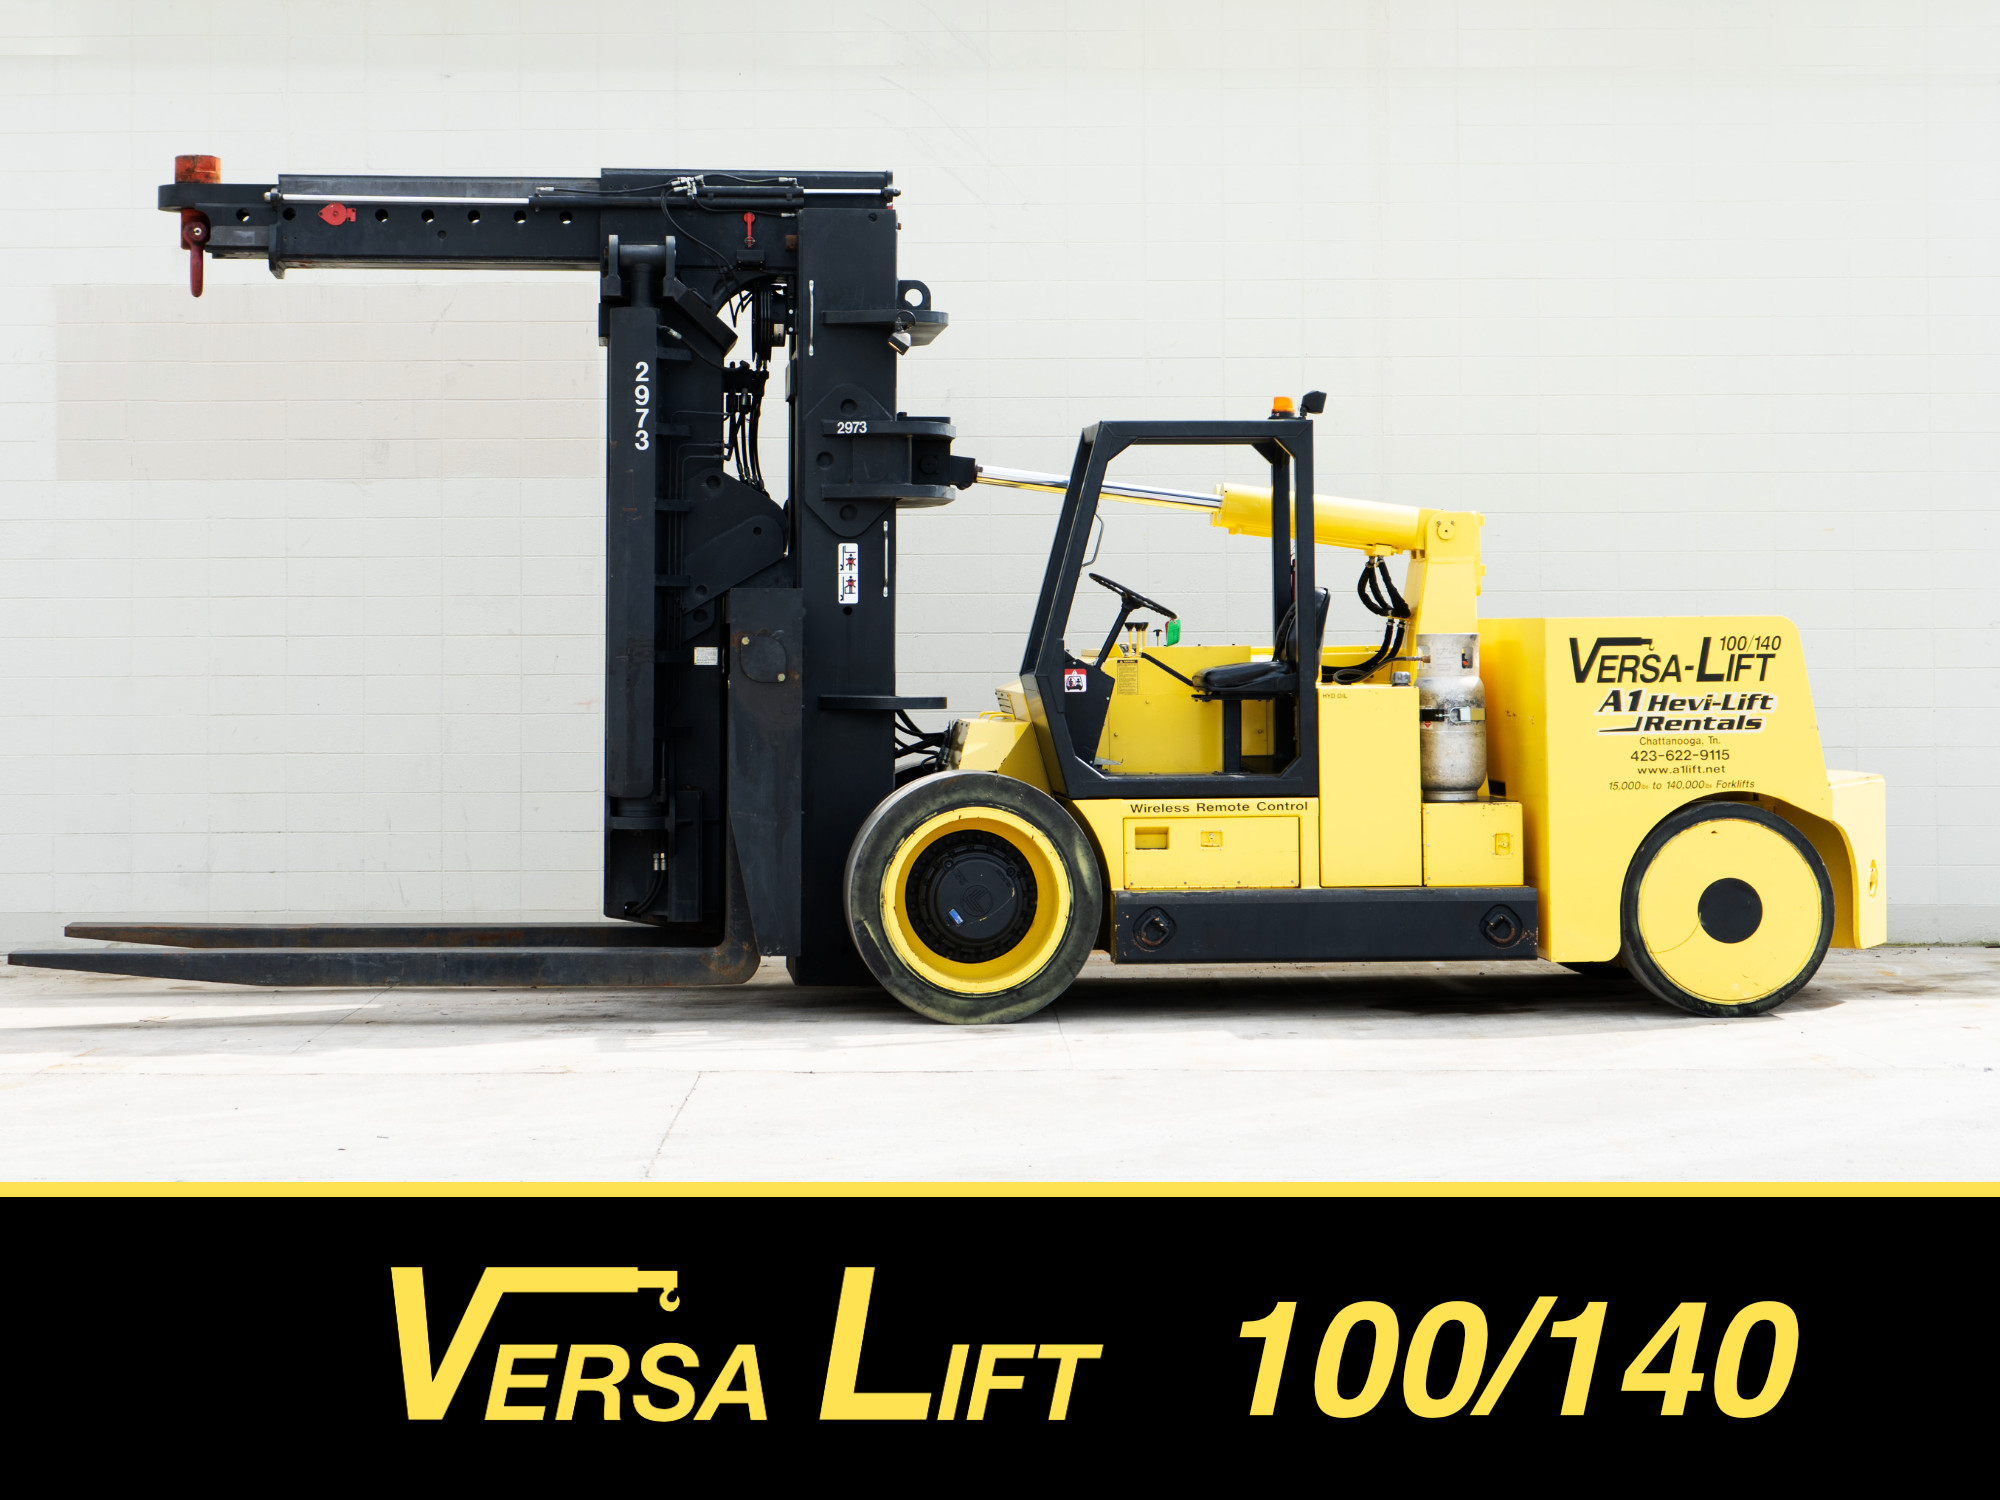 Versa-Lift 100/140 Forklift Rental